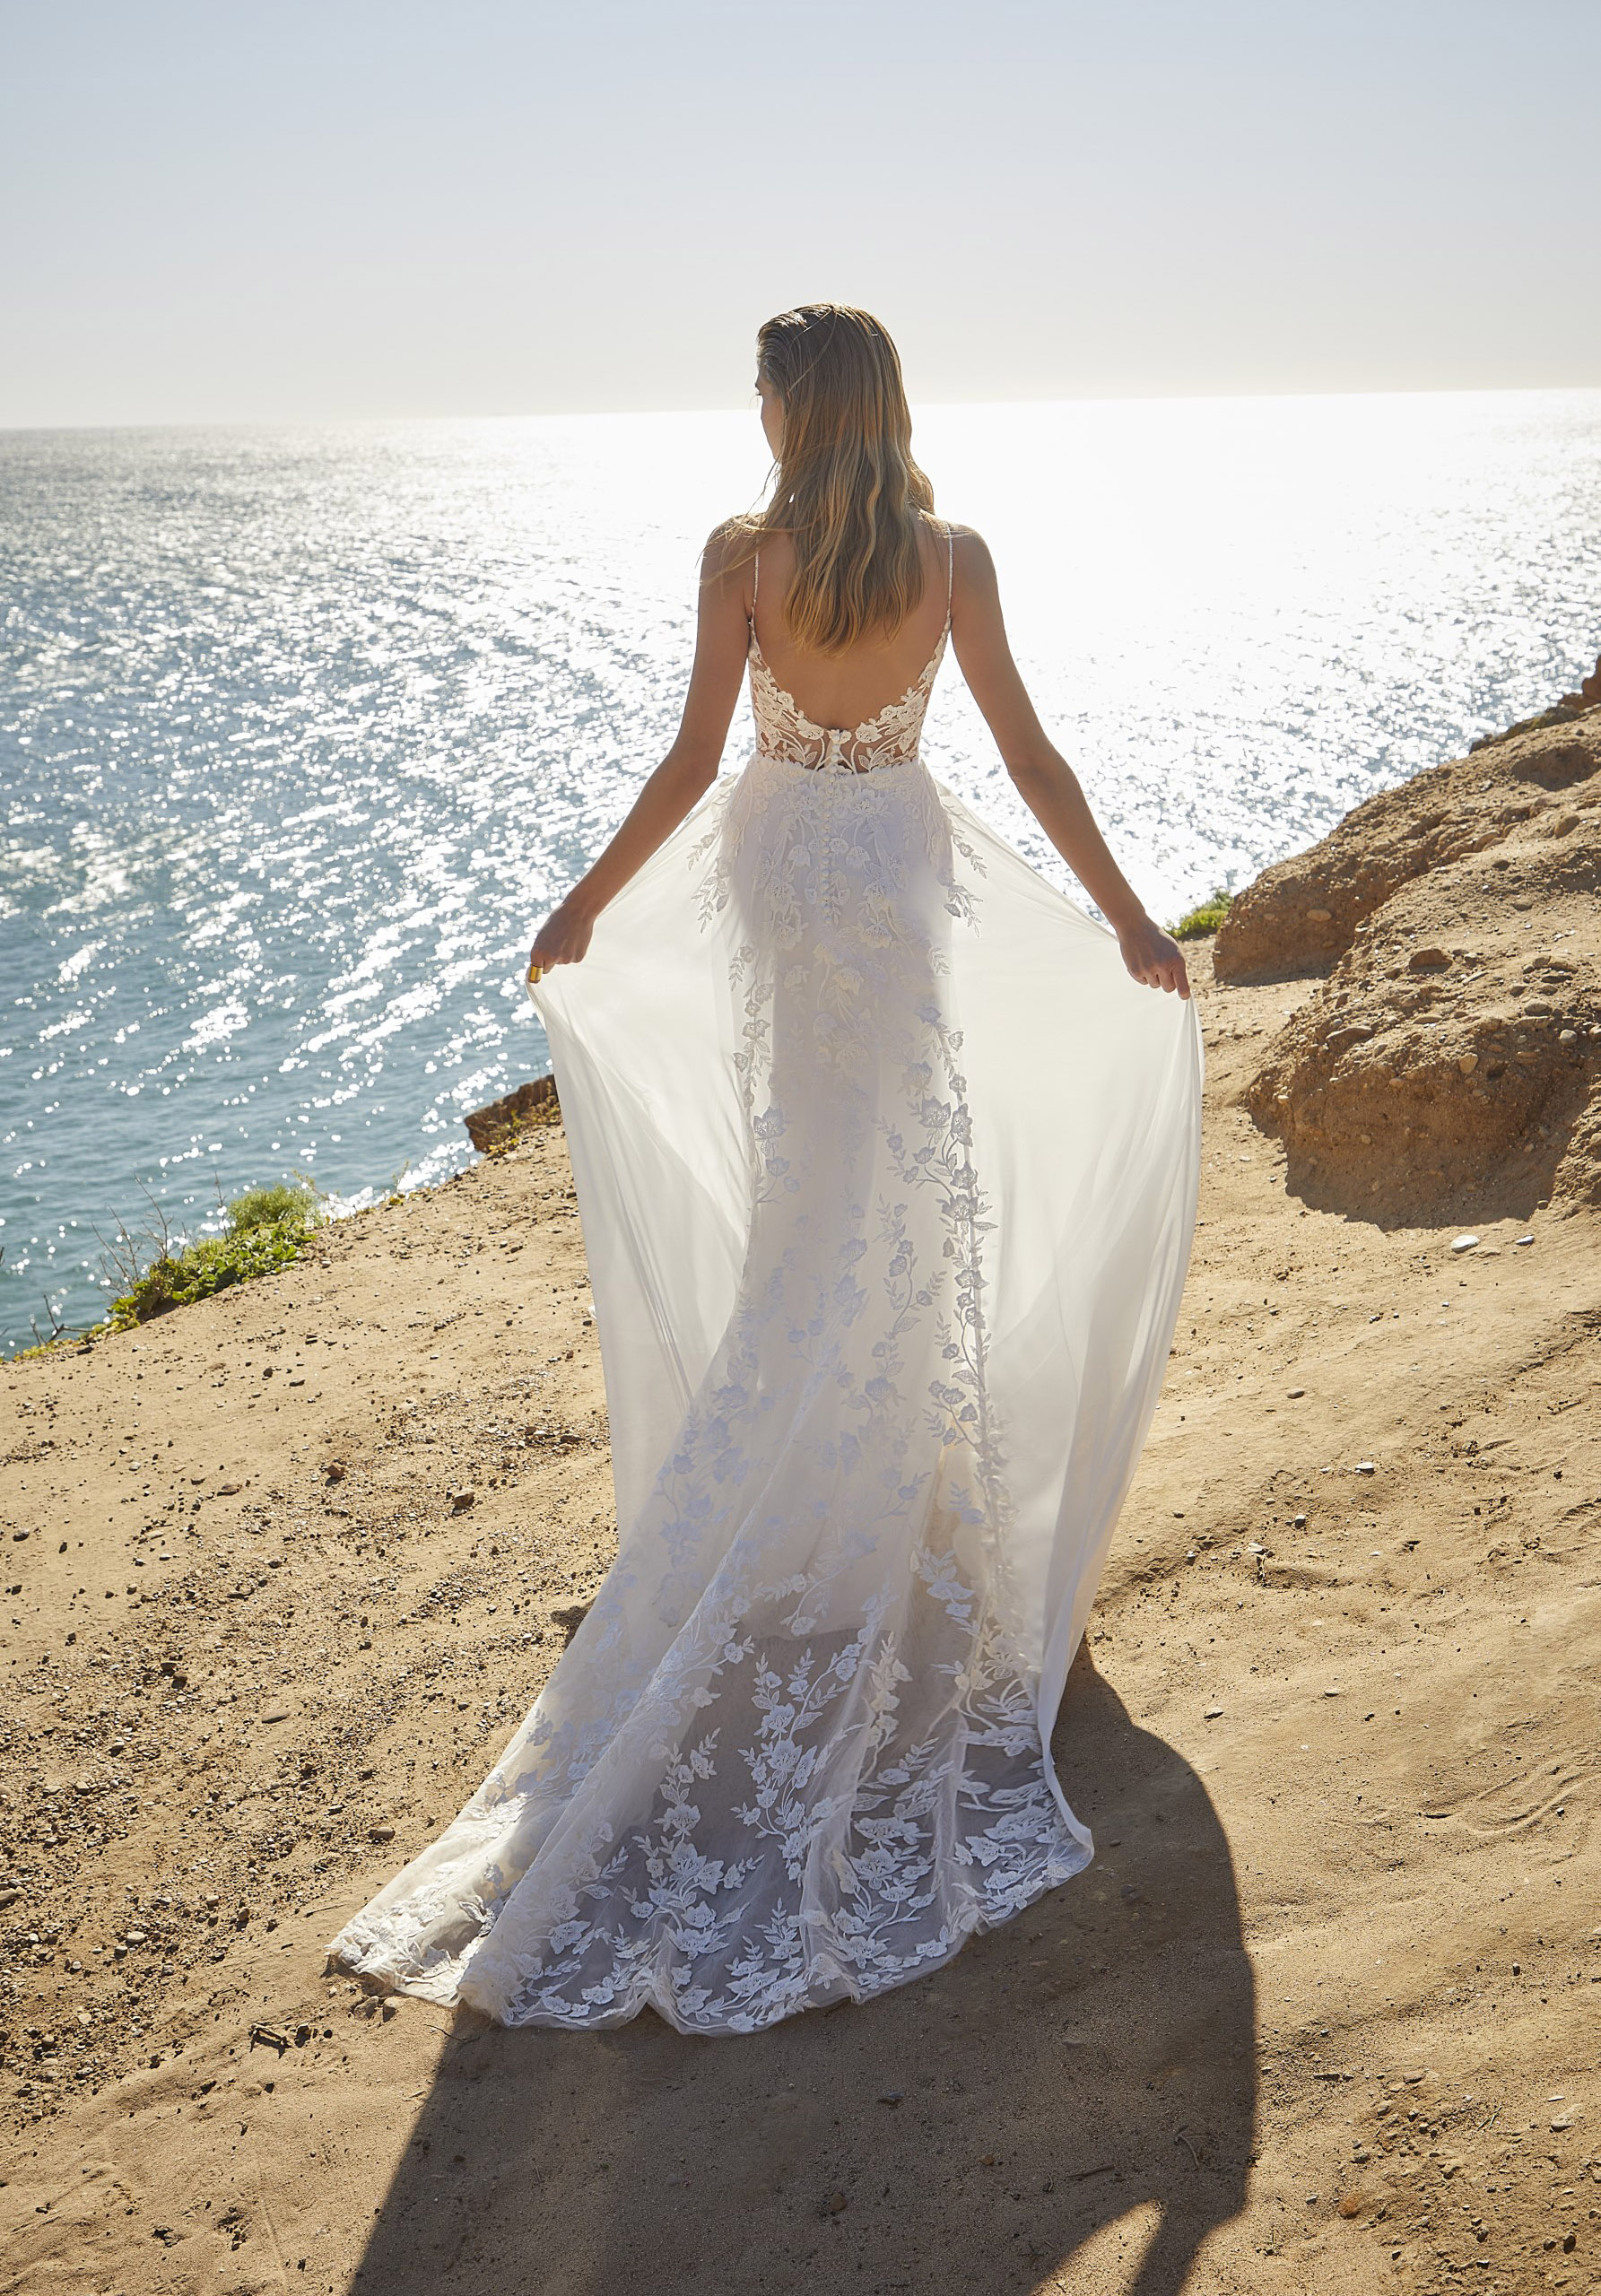 Martha wedding dress by Morilee